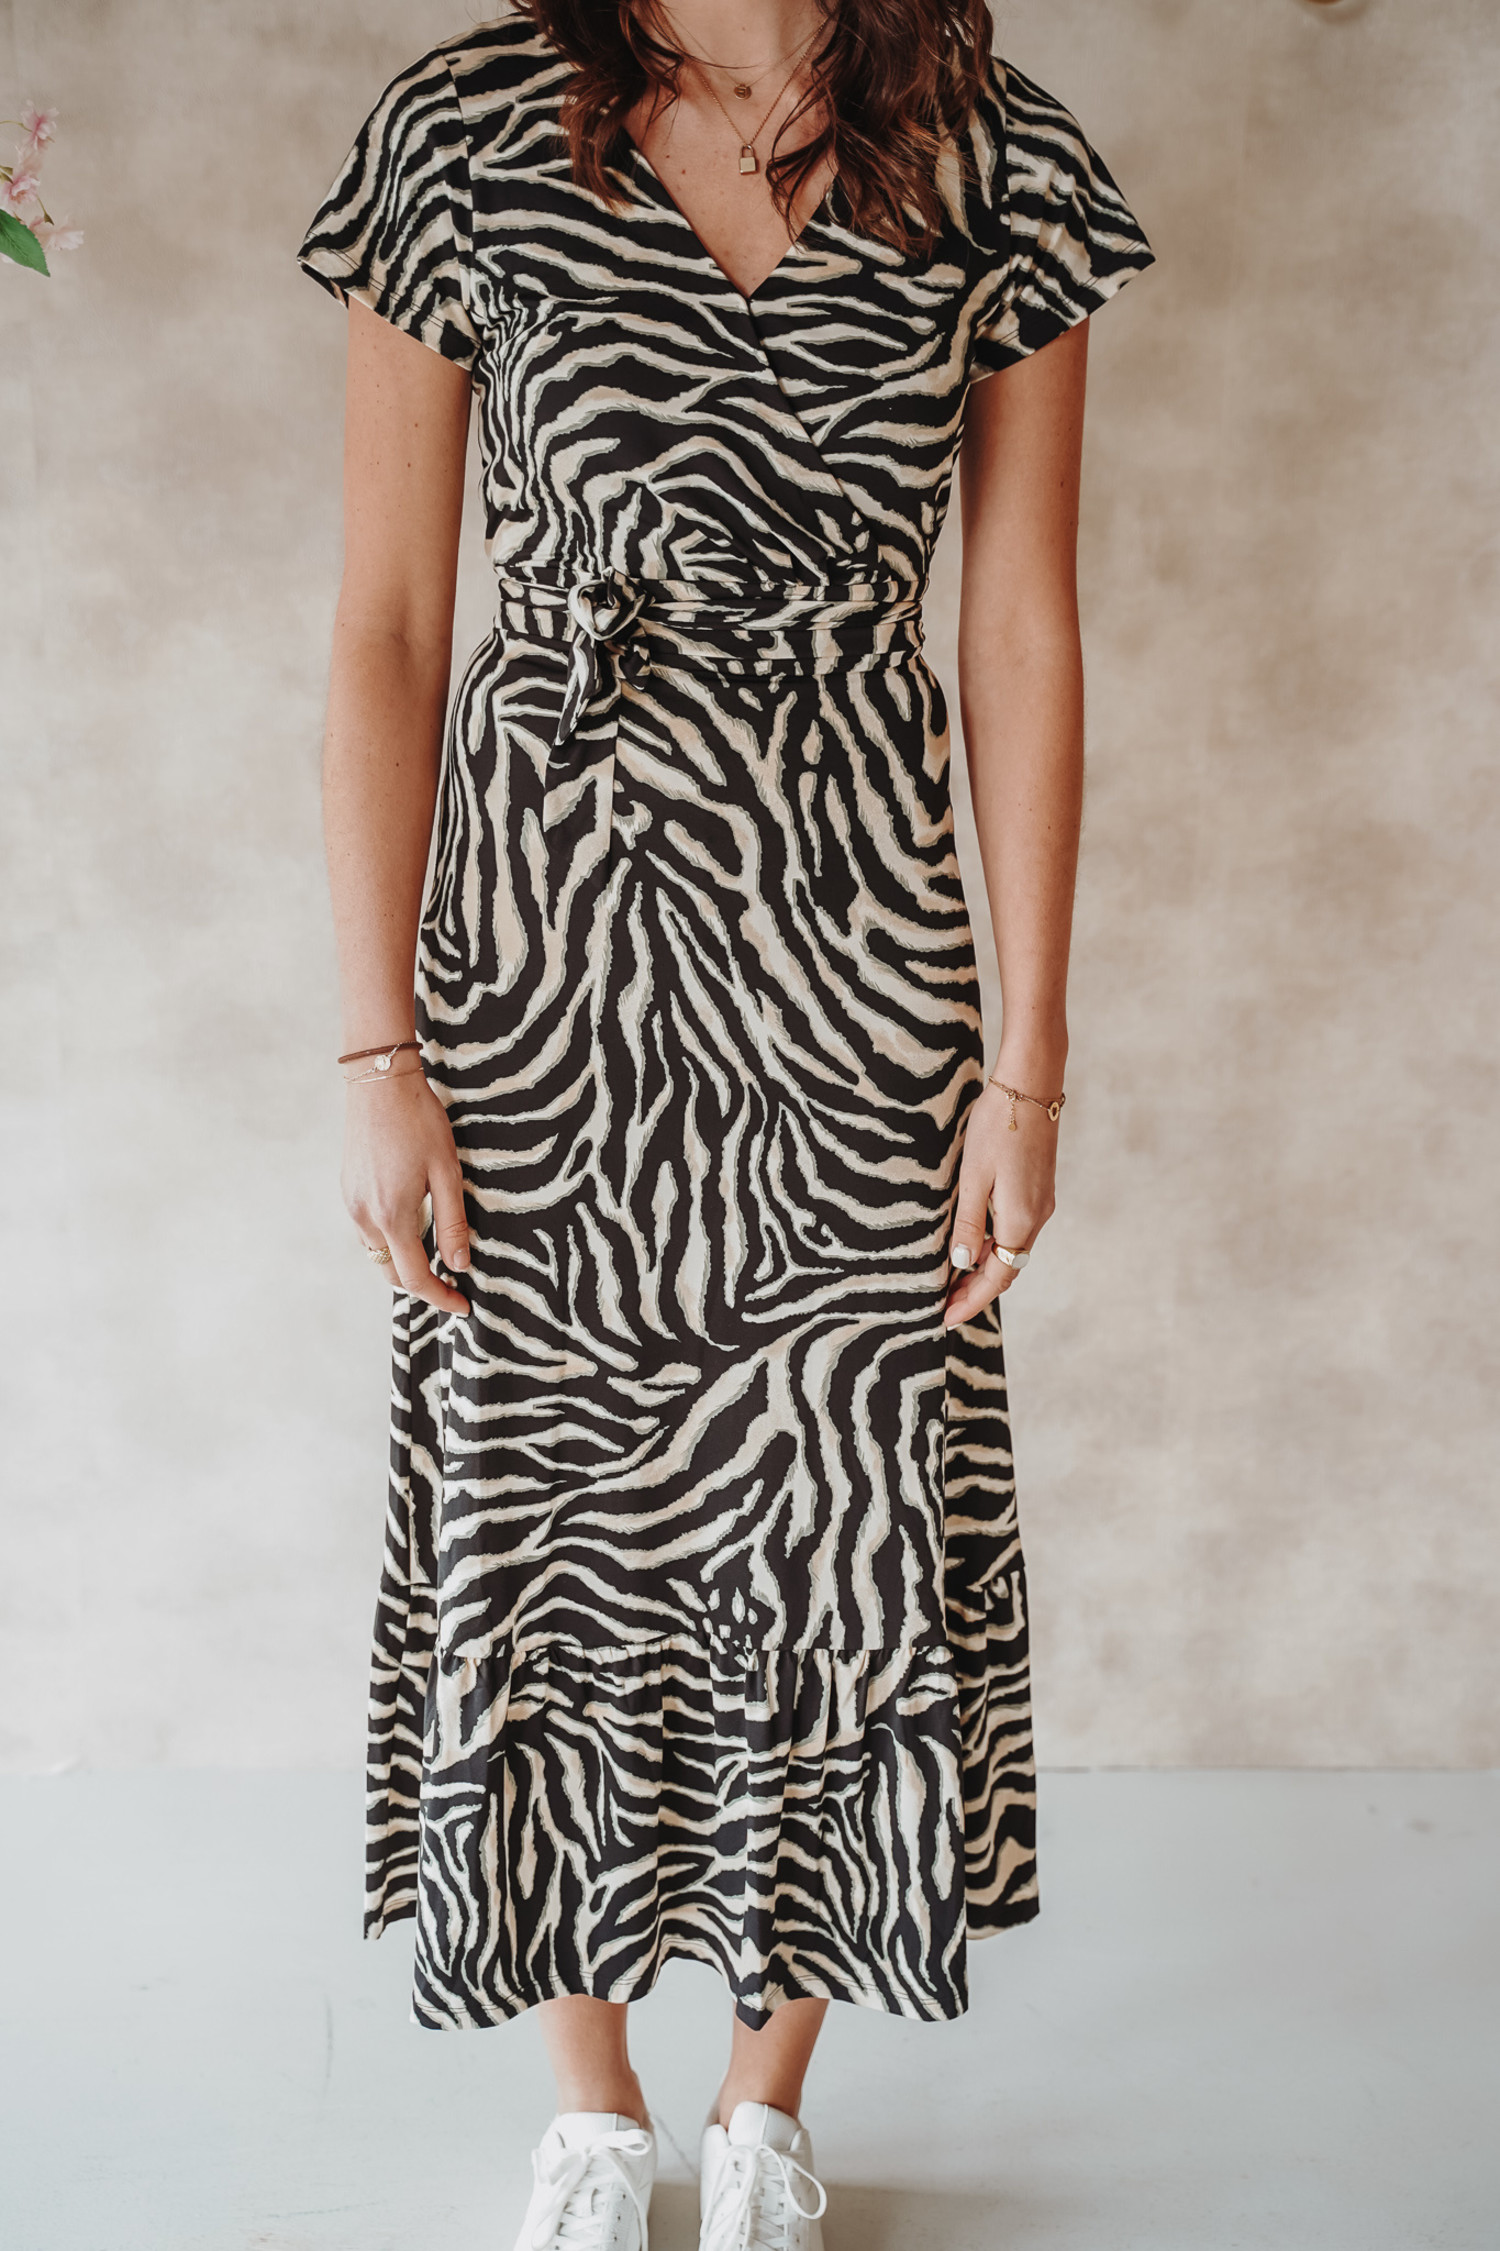 afbreken bijtend zal ik doen Maxi jurk zebra print SL - Bij Keesje